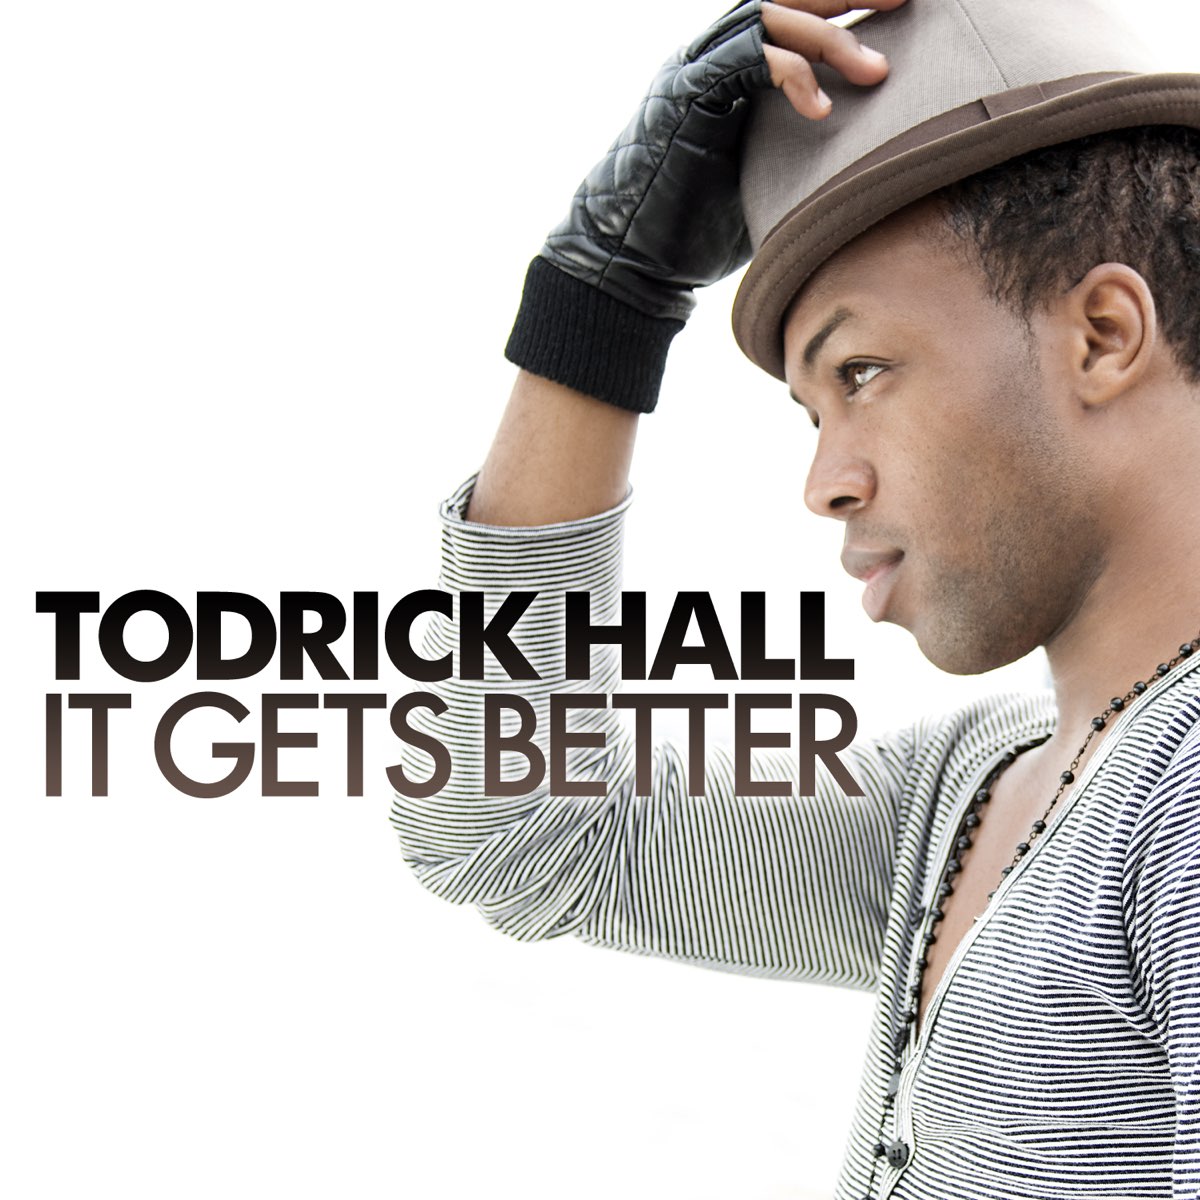 Everything gets better. Todrick Hall. Todrick Hall album. Better певец. Todrick Hall Wig.